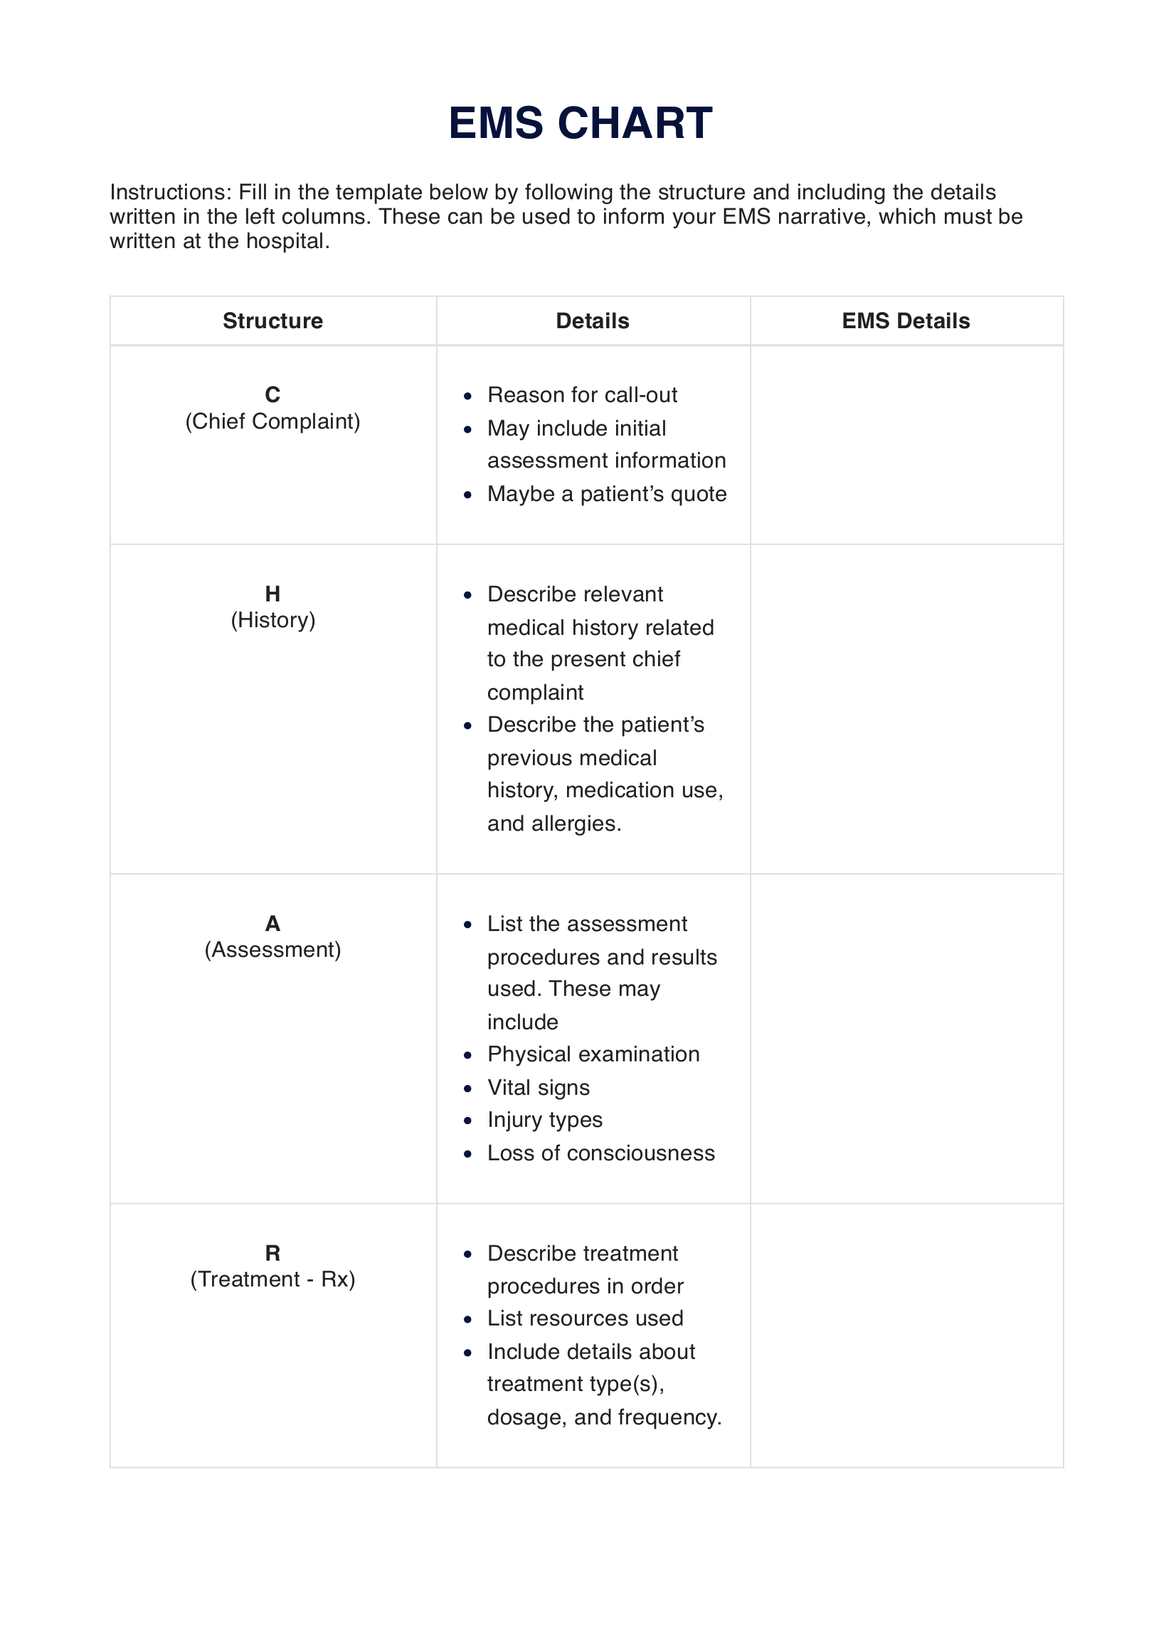 EMS CHART PDF Example